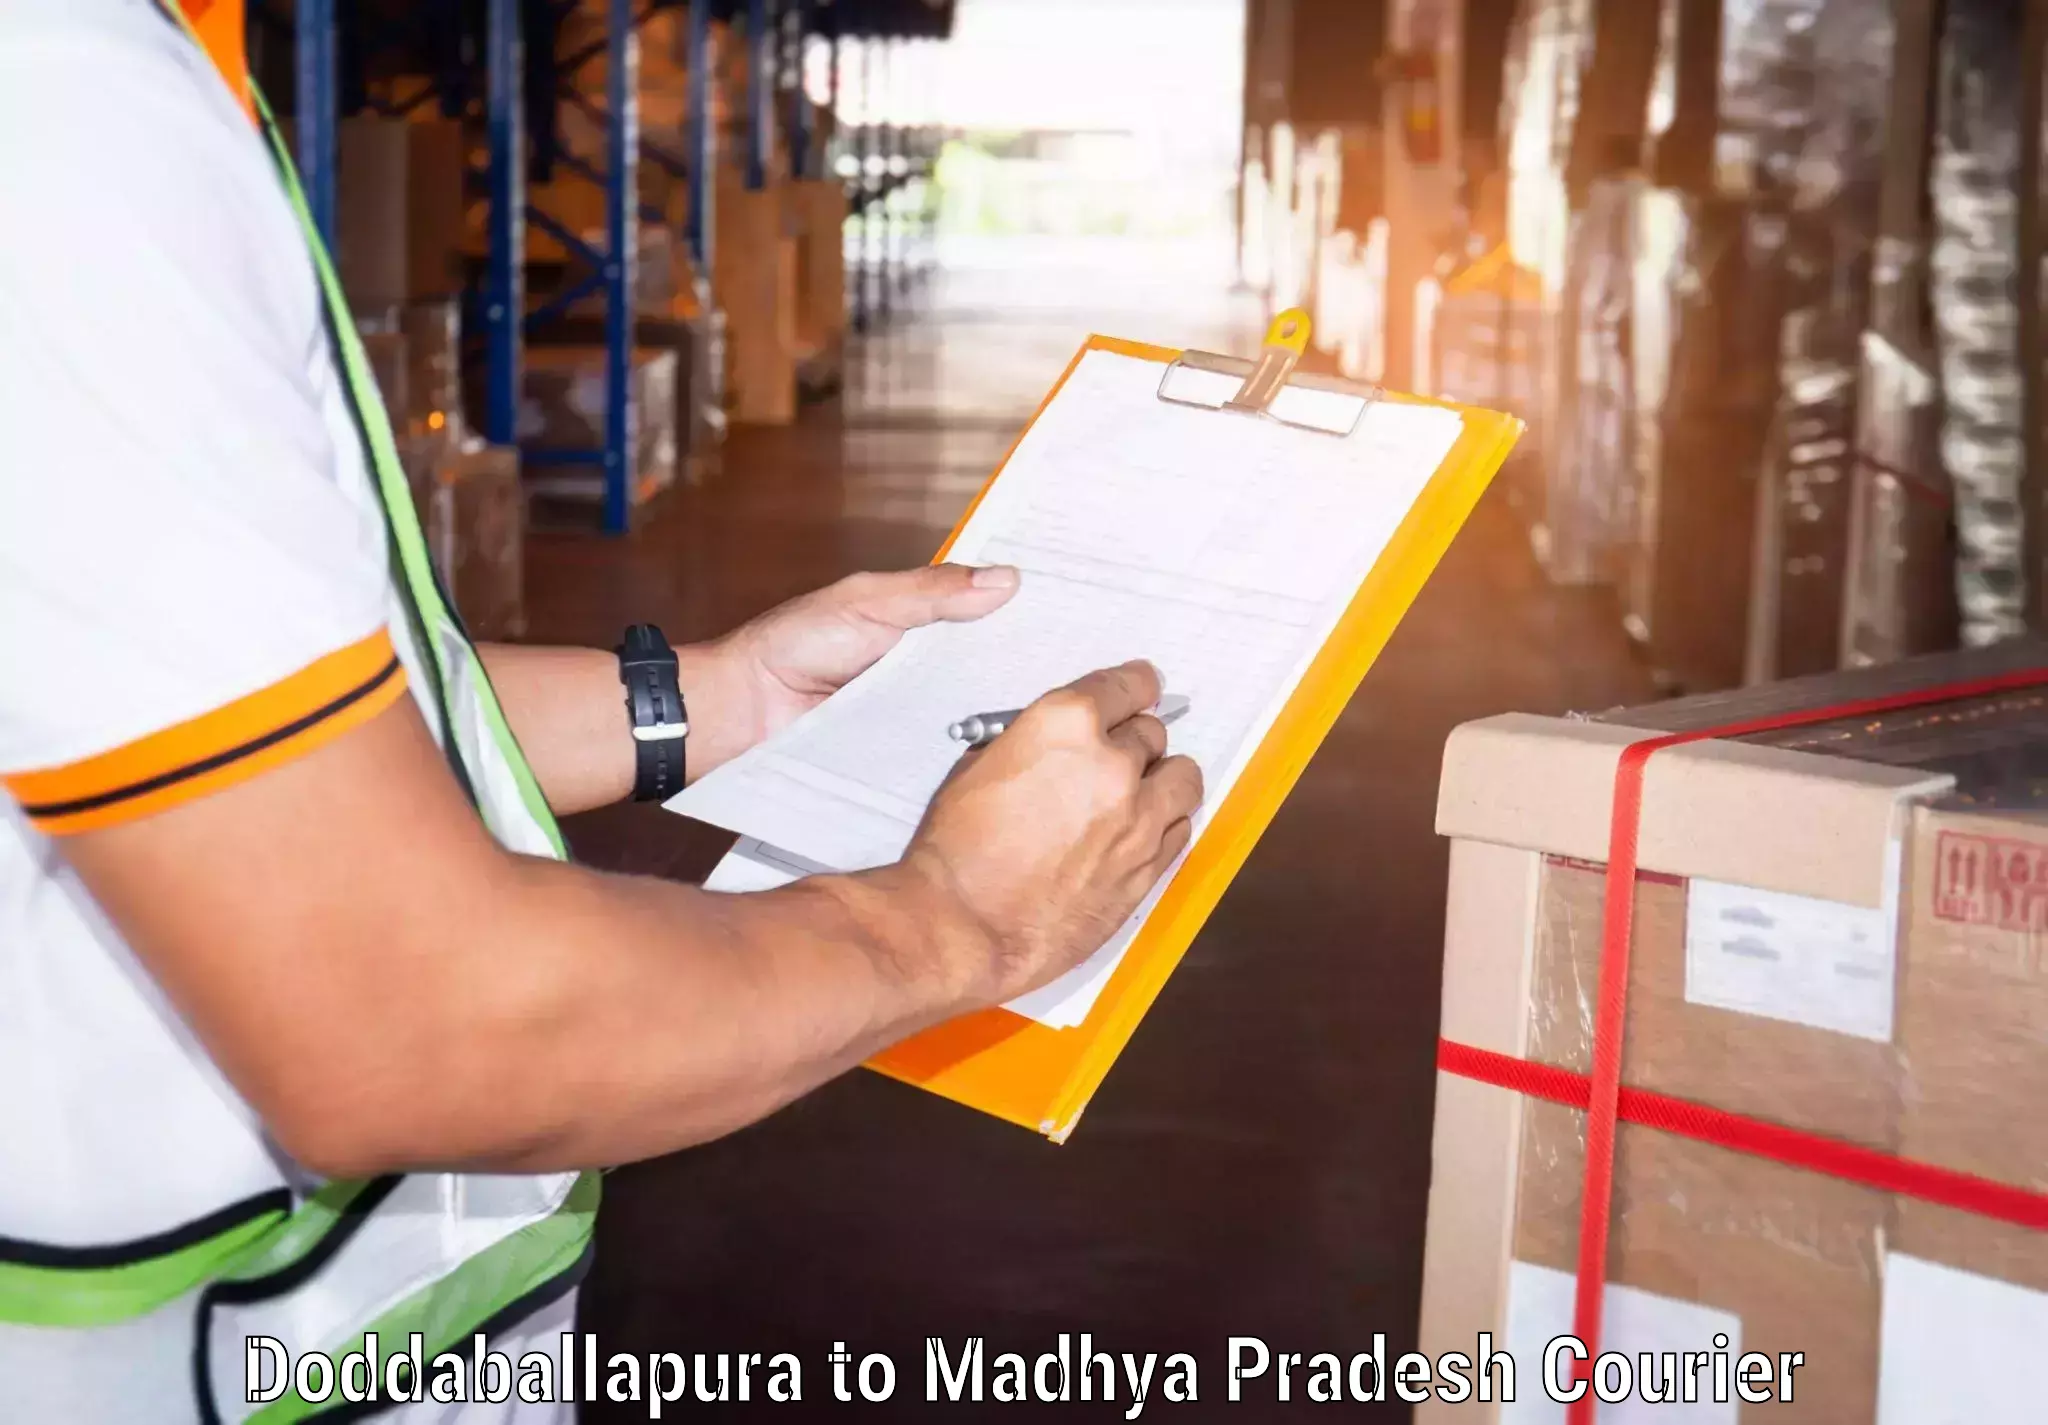 High-priority parcel service Doddaballapura to Sagar